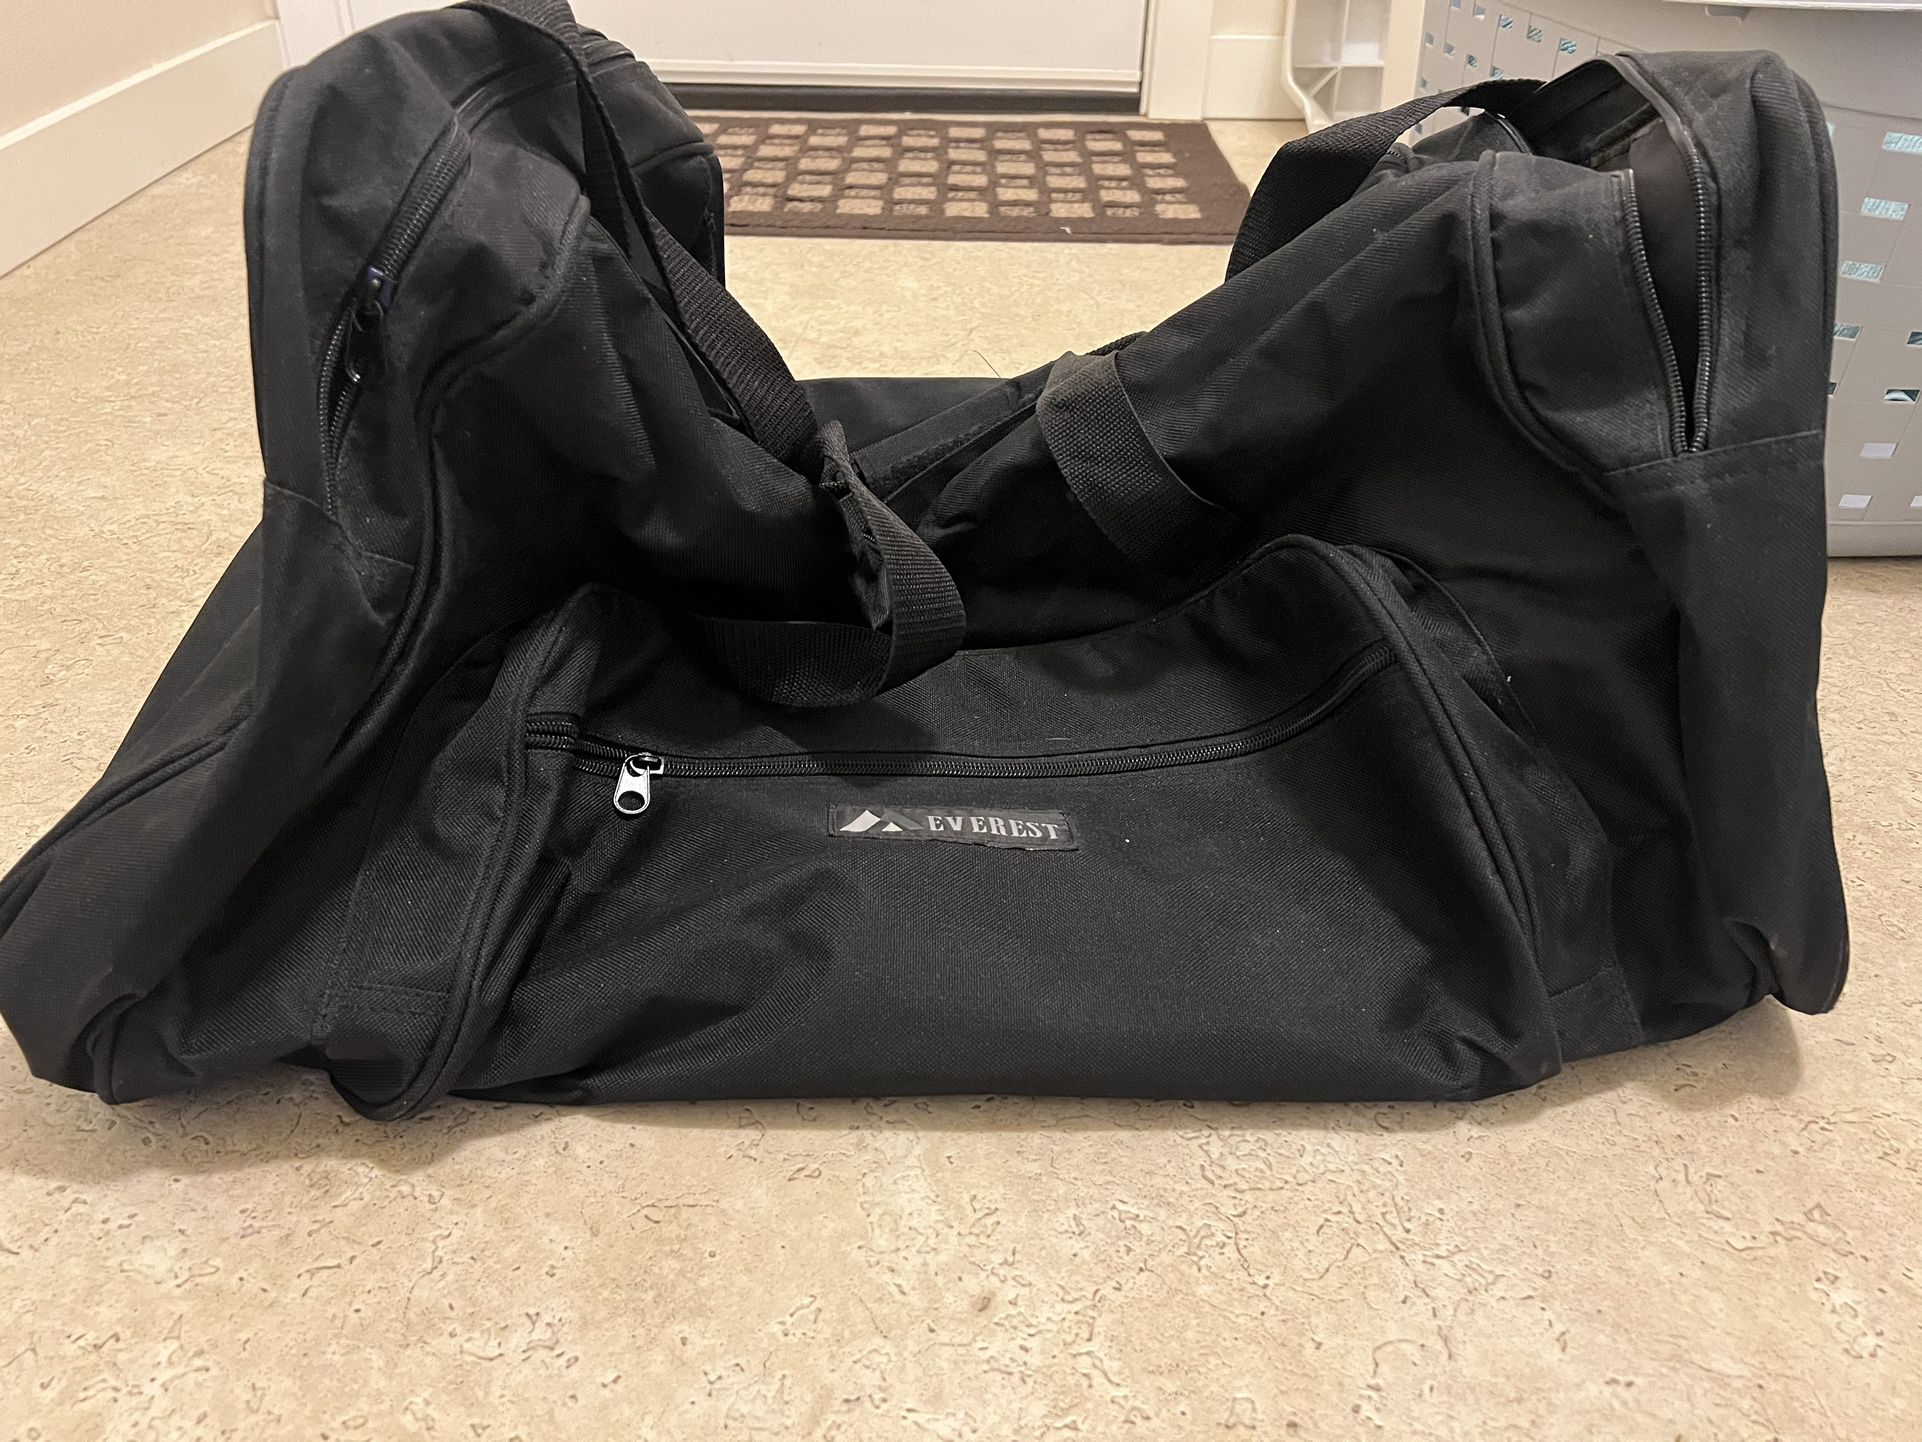 Sturdy Everest Duffle Bag-28x14x14